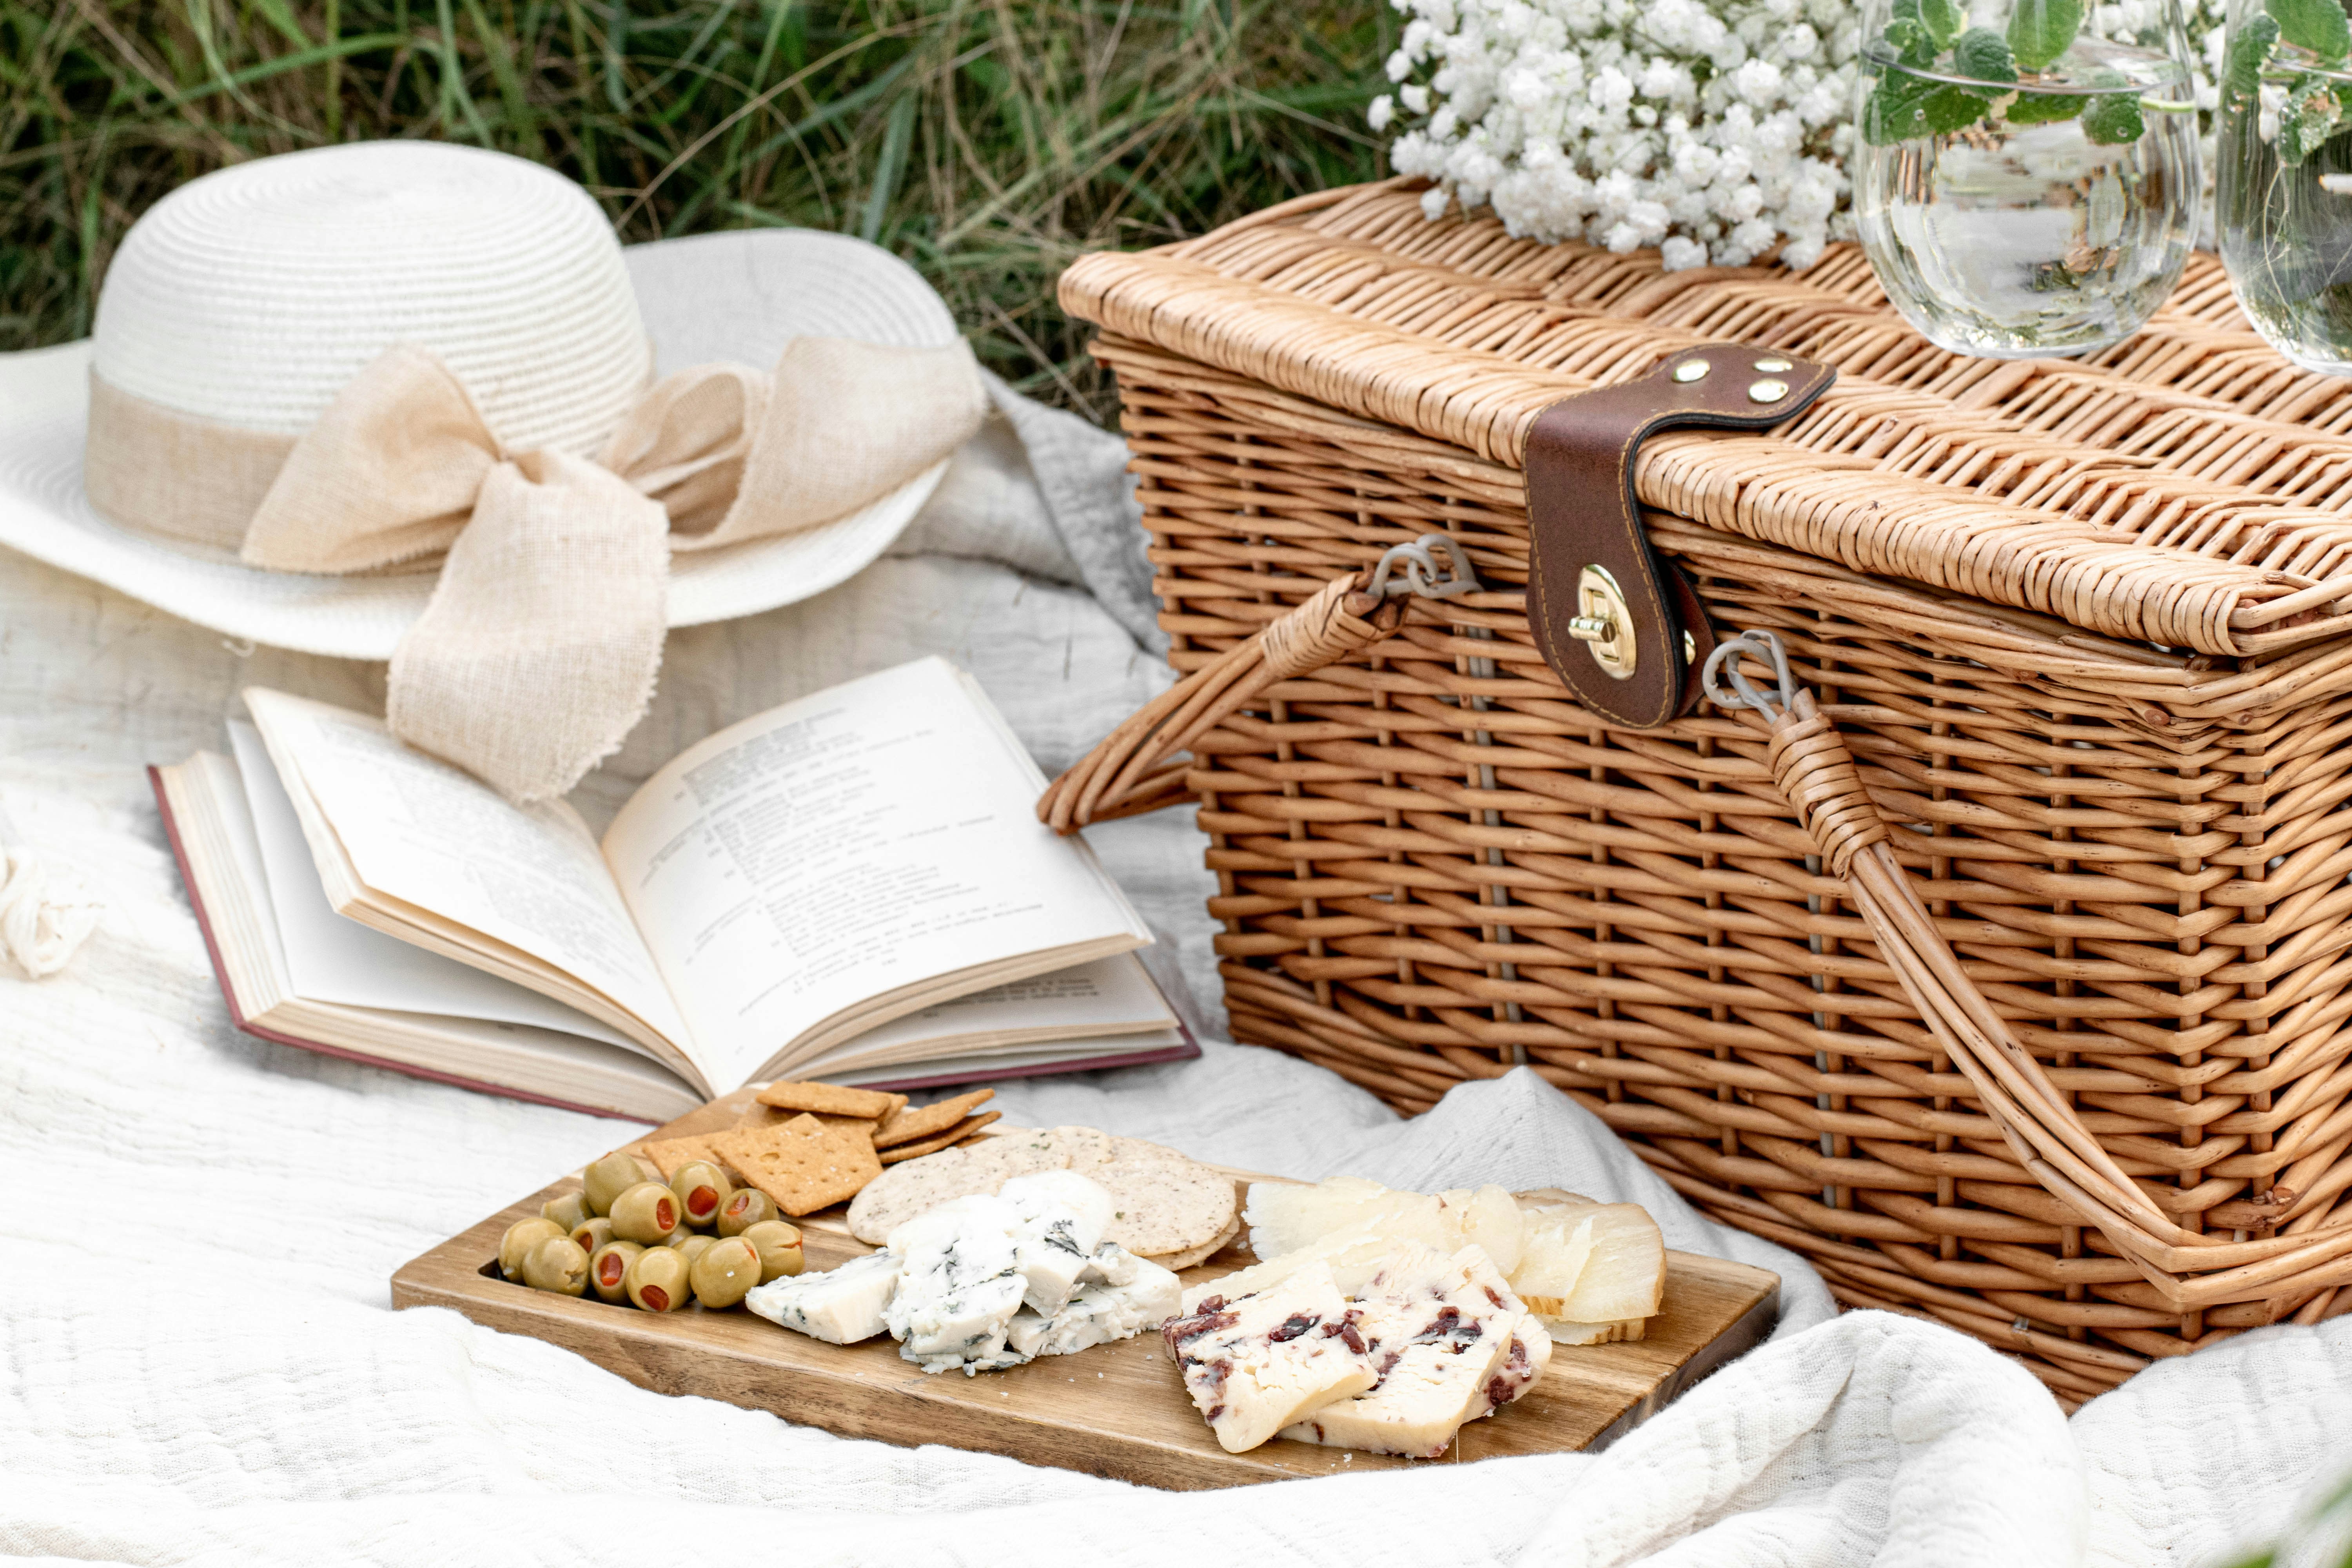 A picnic basket, food, a book, and a hat | Source: Unsplash